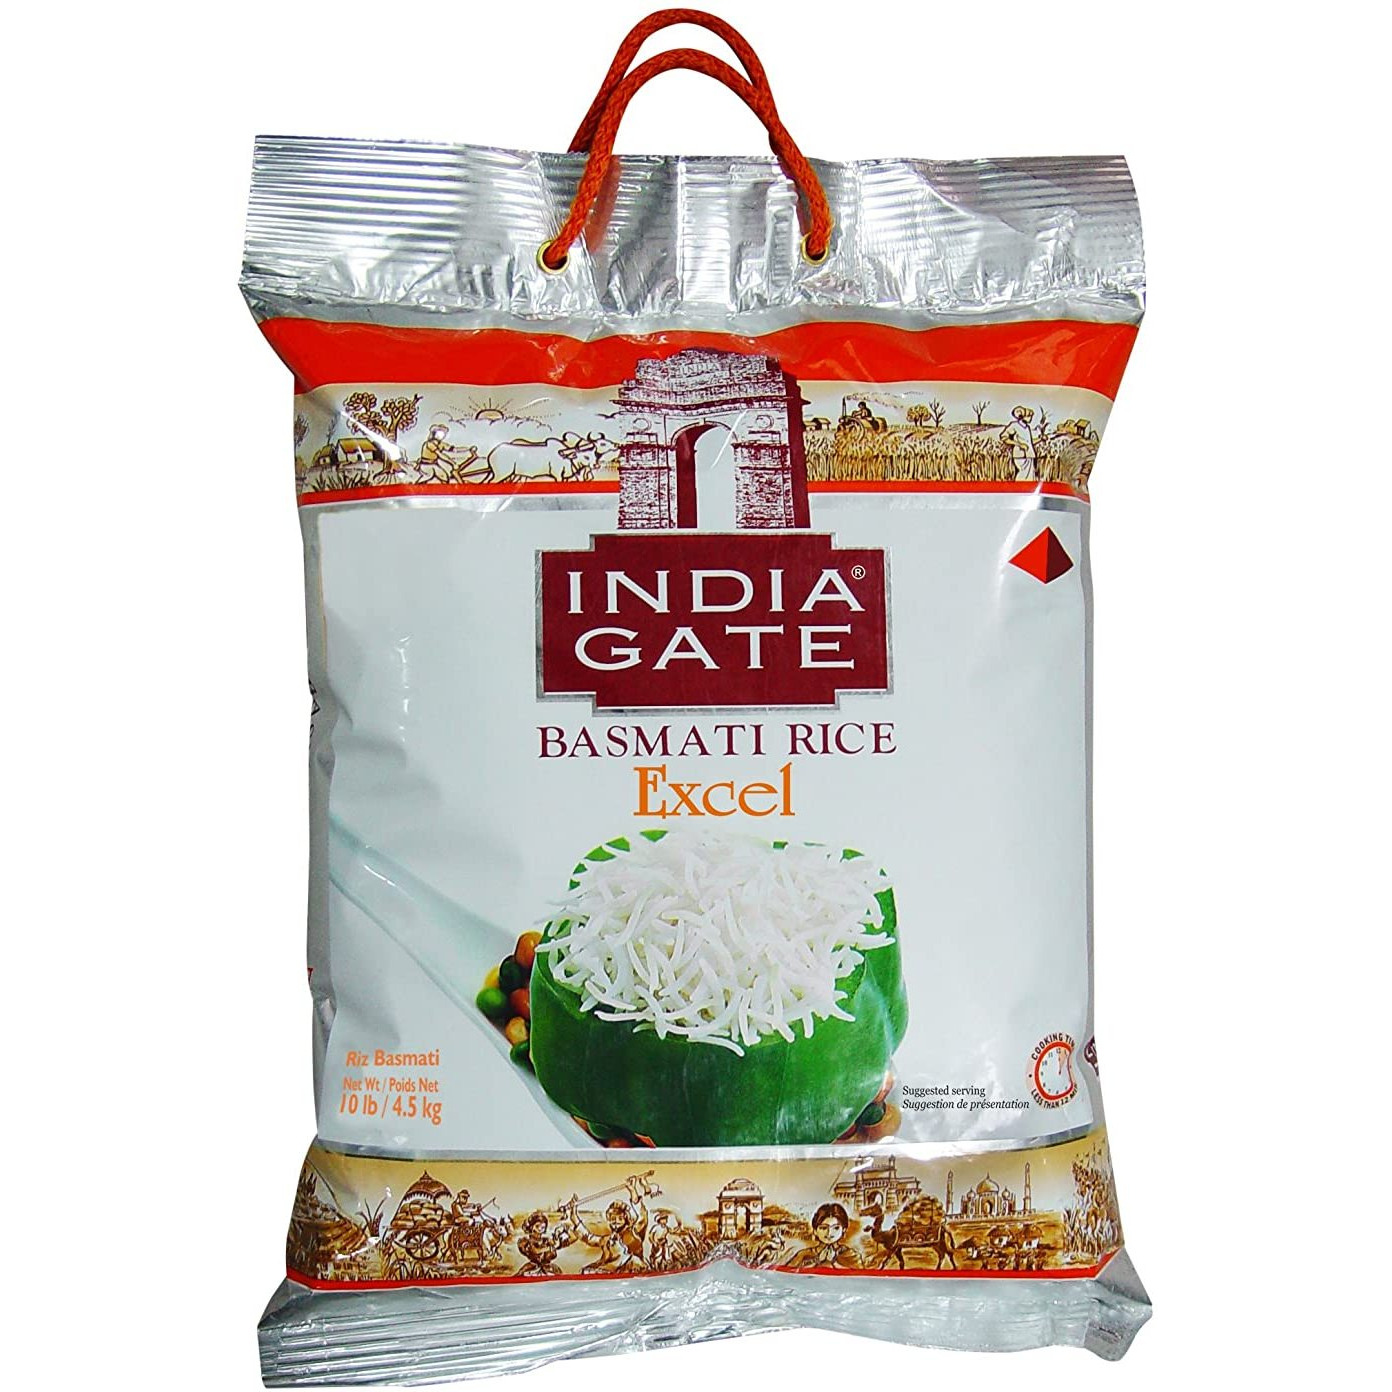 India Gate Basmati Rice Excel - 10 Lb (4.5 Kg)